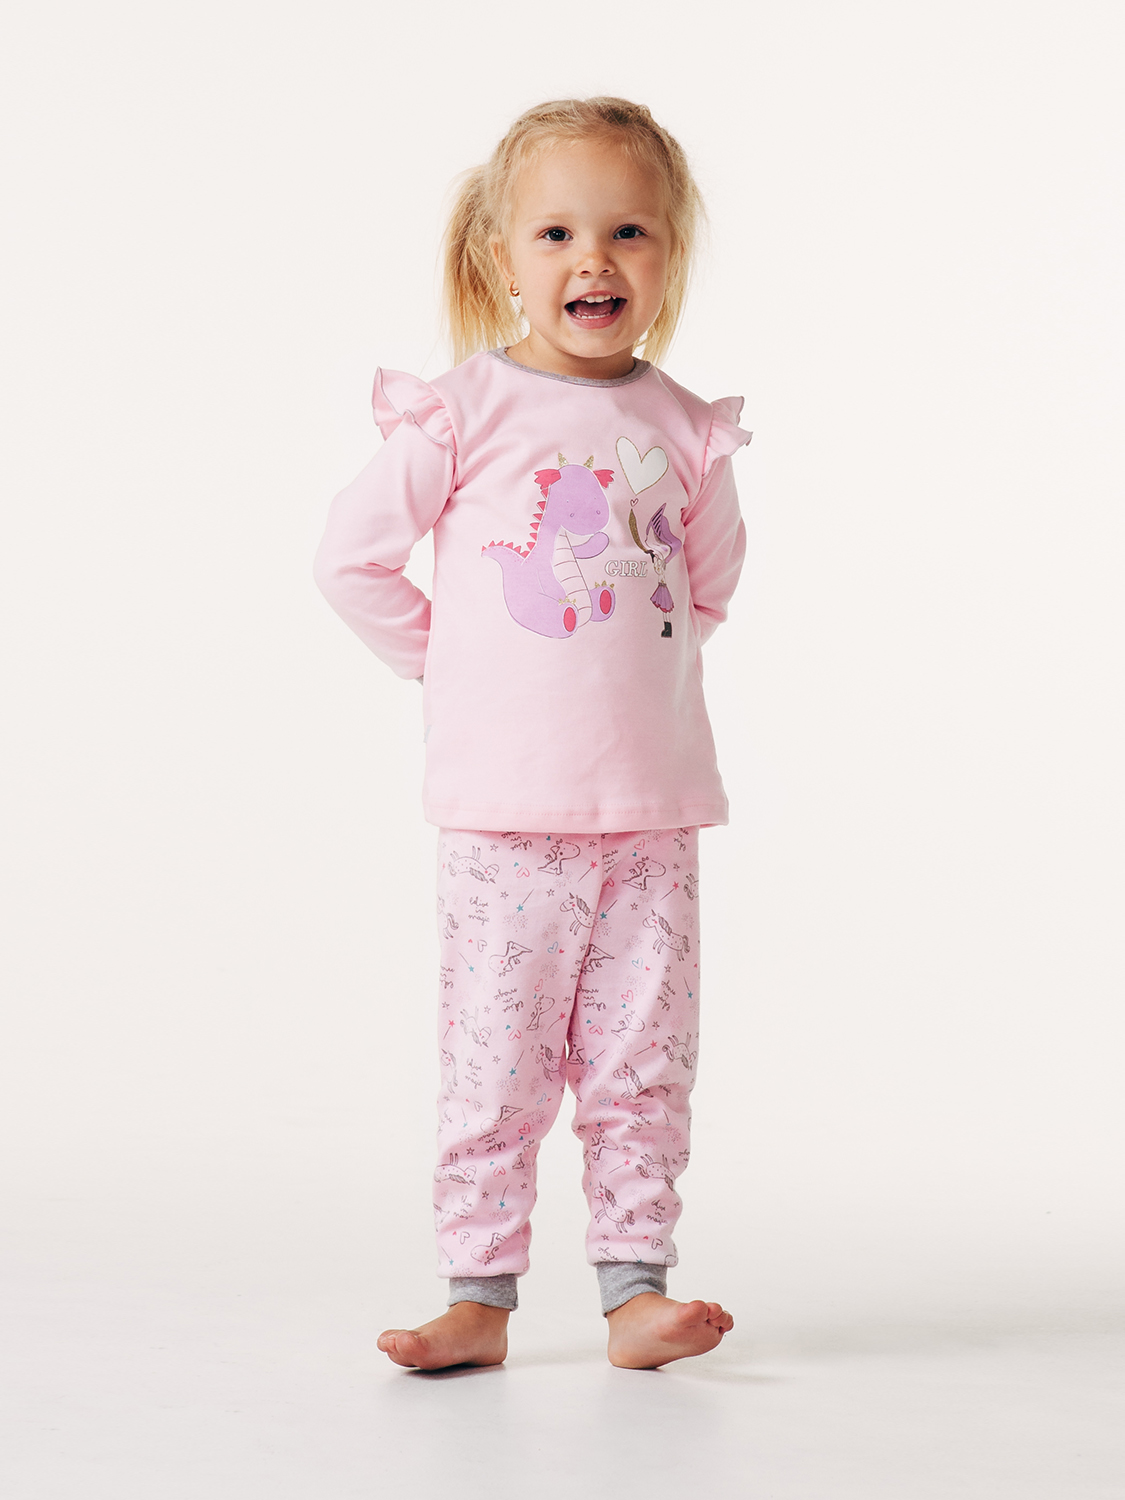 Пижама с кнопкой для девочки, арт.104247, возраст от 12 до 18 месяцев